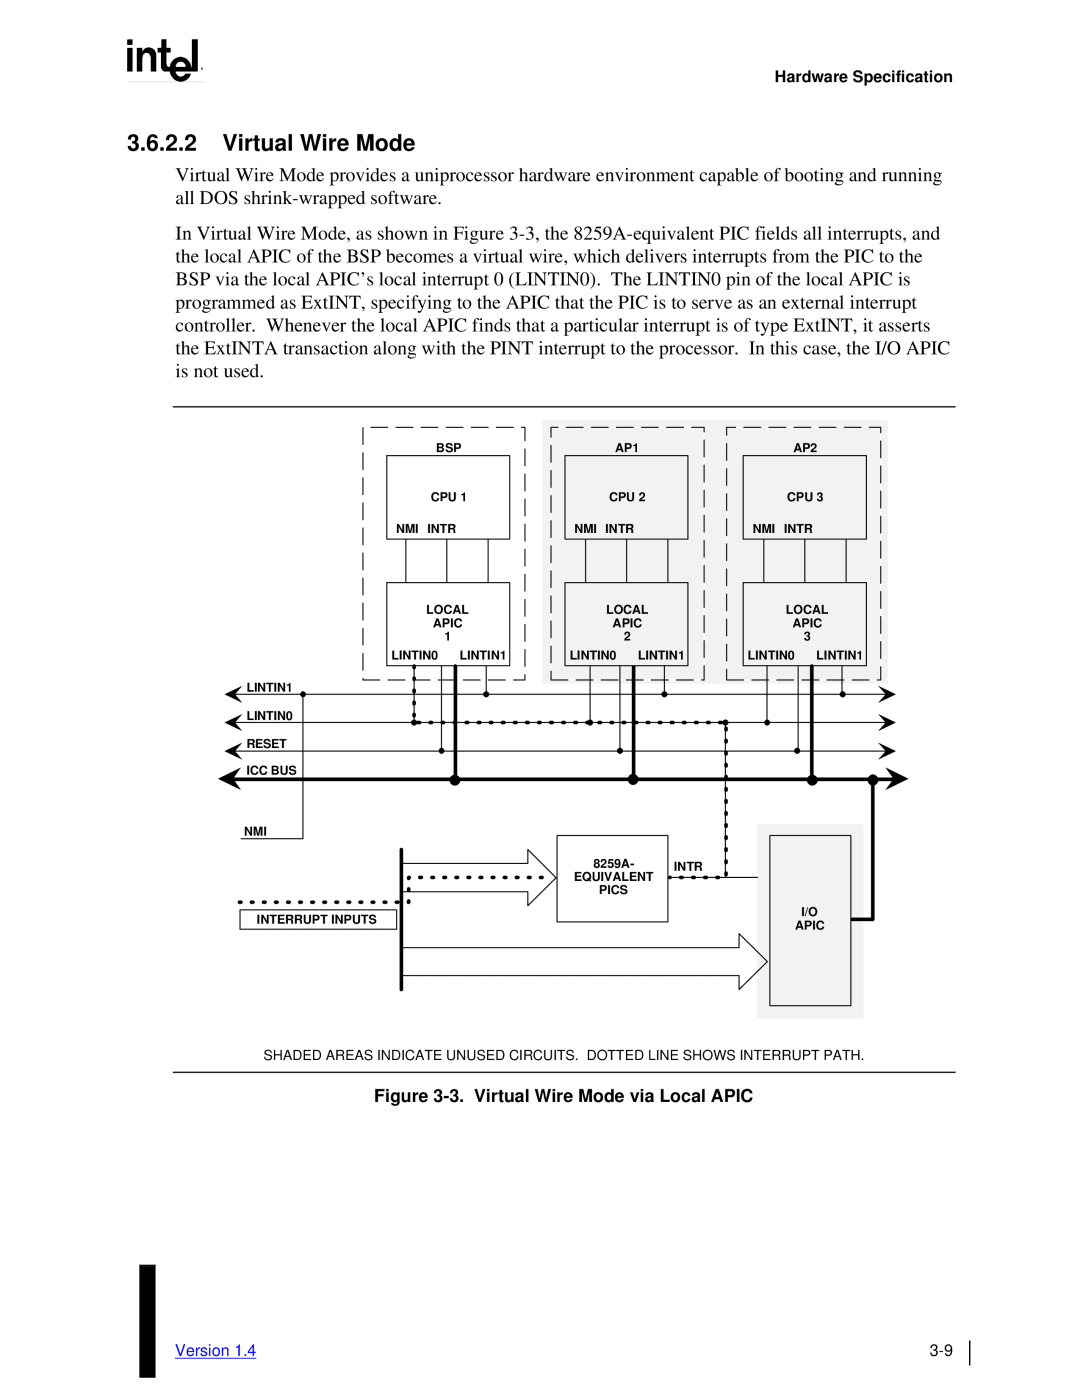 Intel MultiProcessor manual 3.6.2.2Virtual Wire Mode, 3.Virtual Wire Mode via Local APIC 